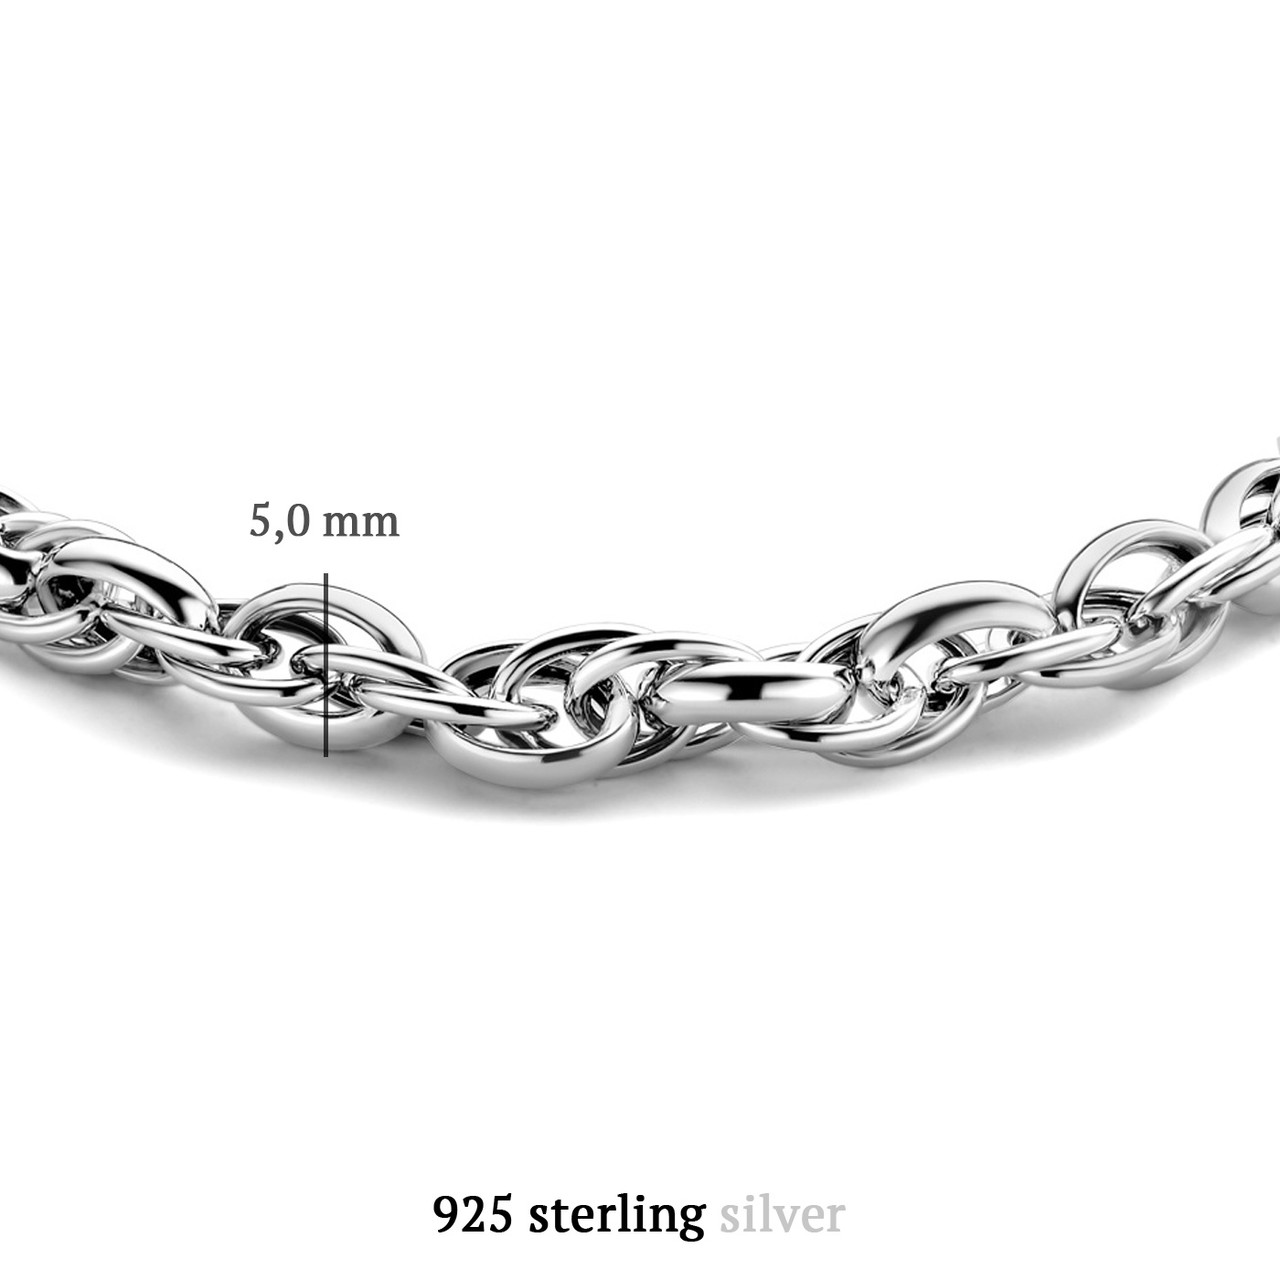 Parte Di Me - 925 sterling silver link bracelet PDM32011